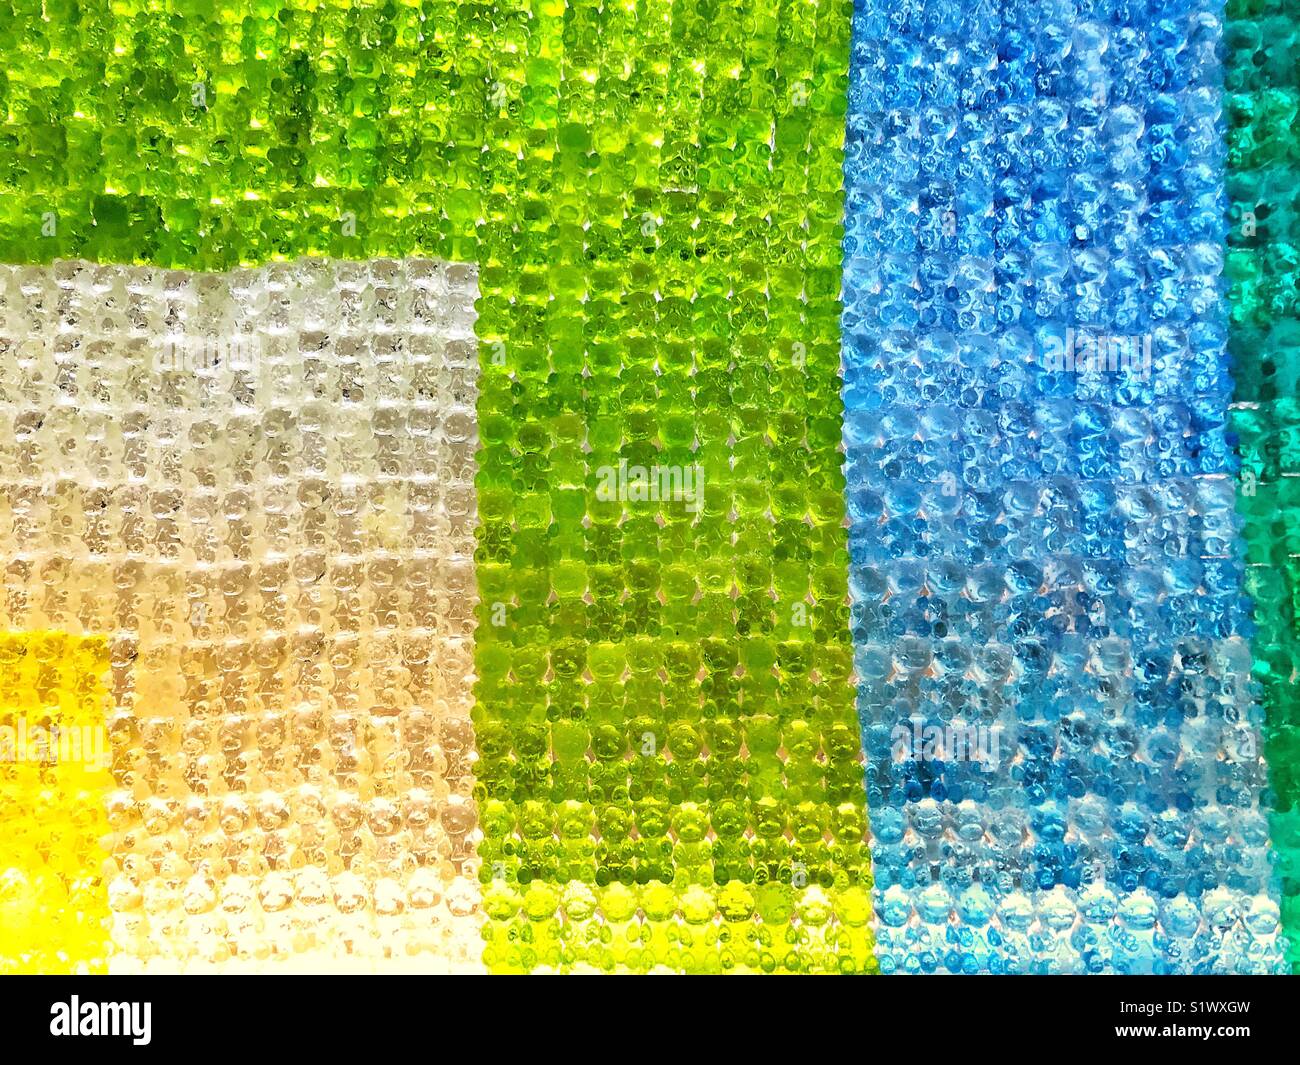 Geometric pattern created from gummy bears. Stock Photo